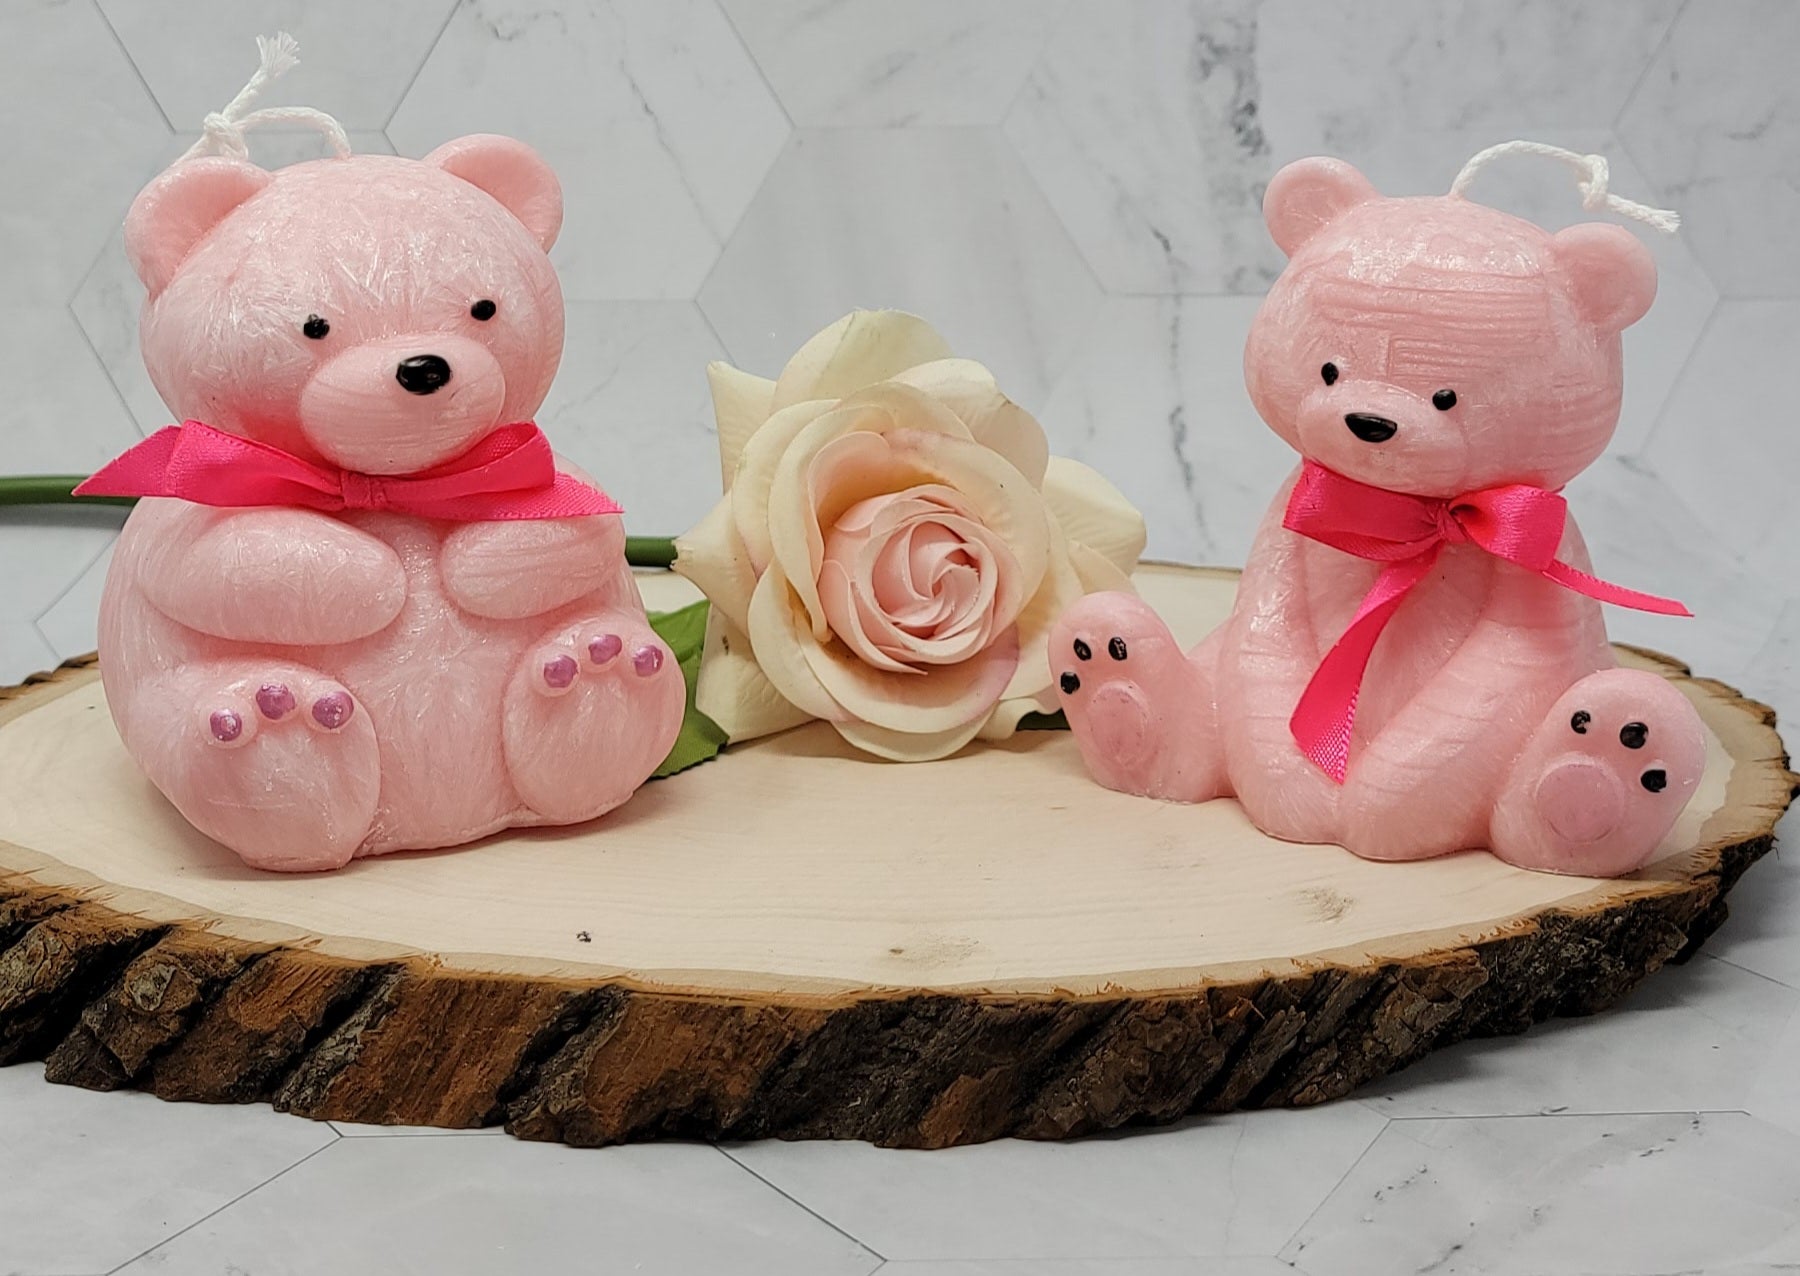 Teddy Bear Candles - Cute candles